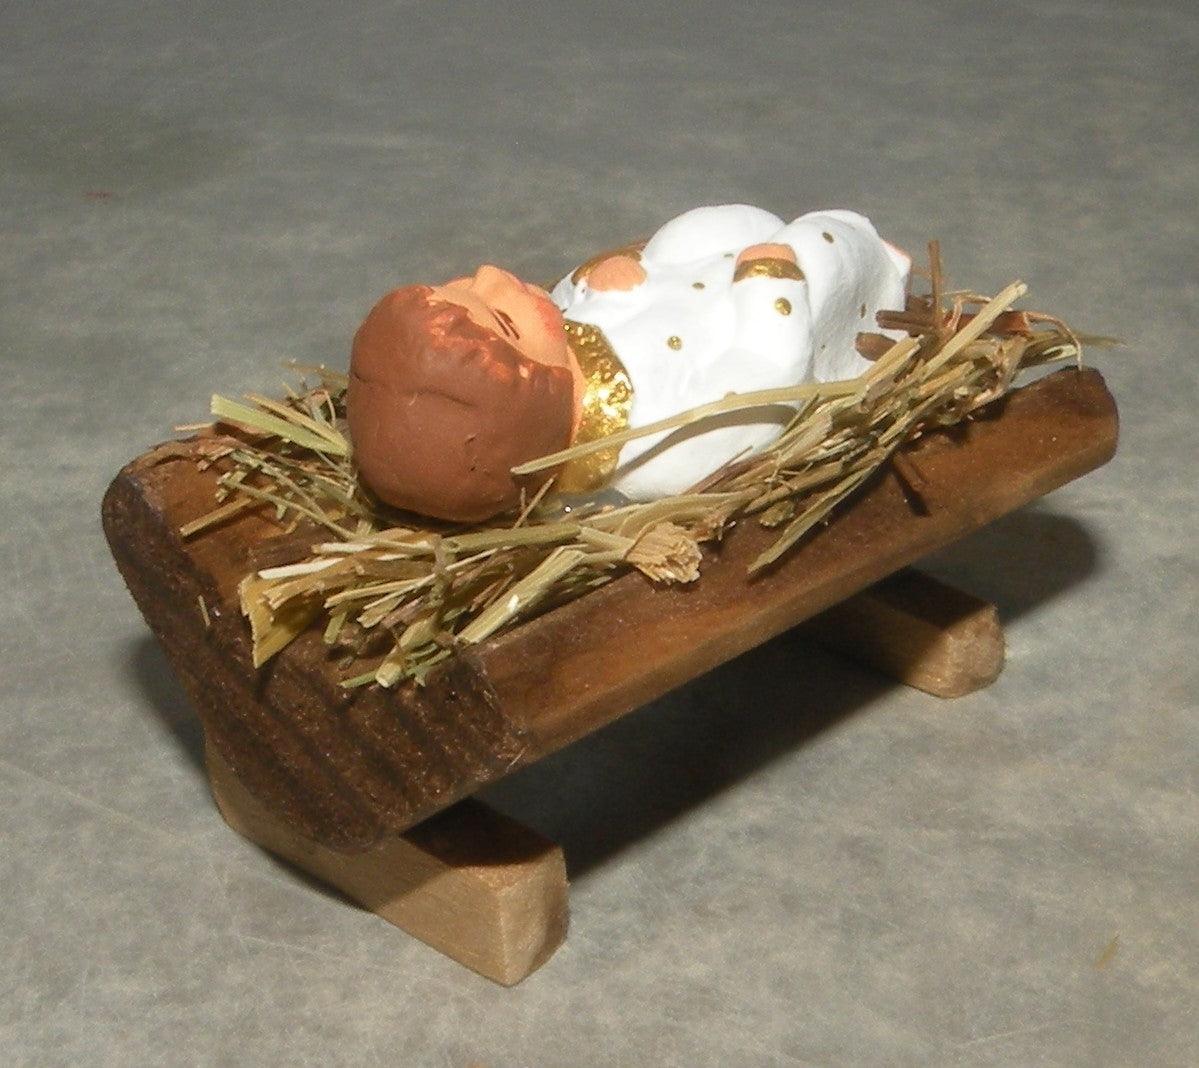 Jesus on straw in wooden cradle, Didier, 7 cm